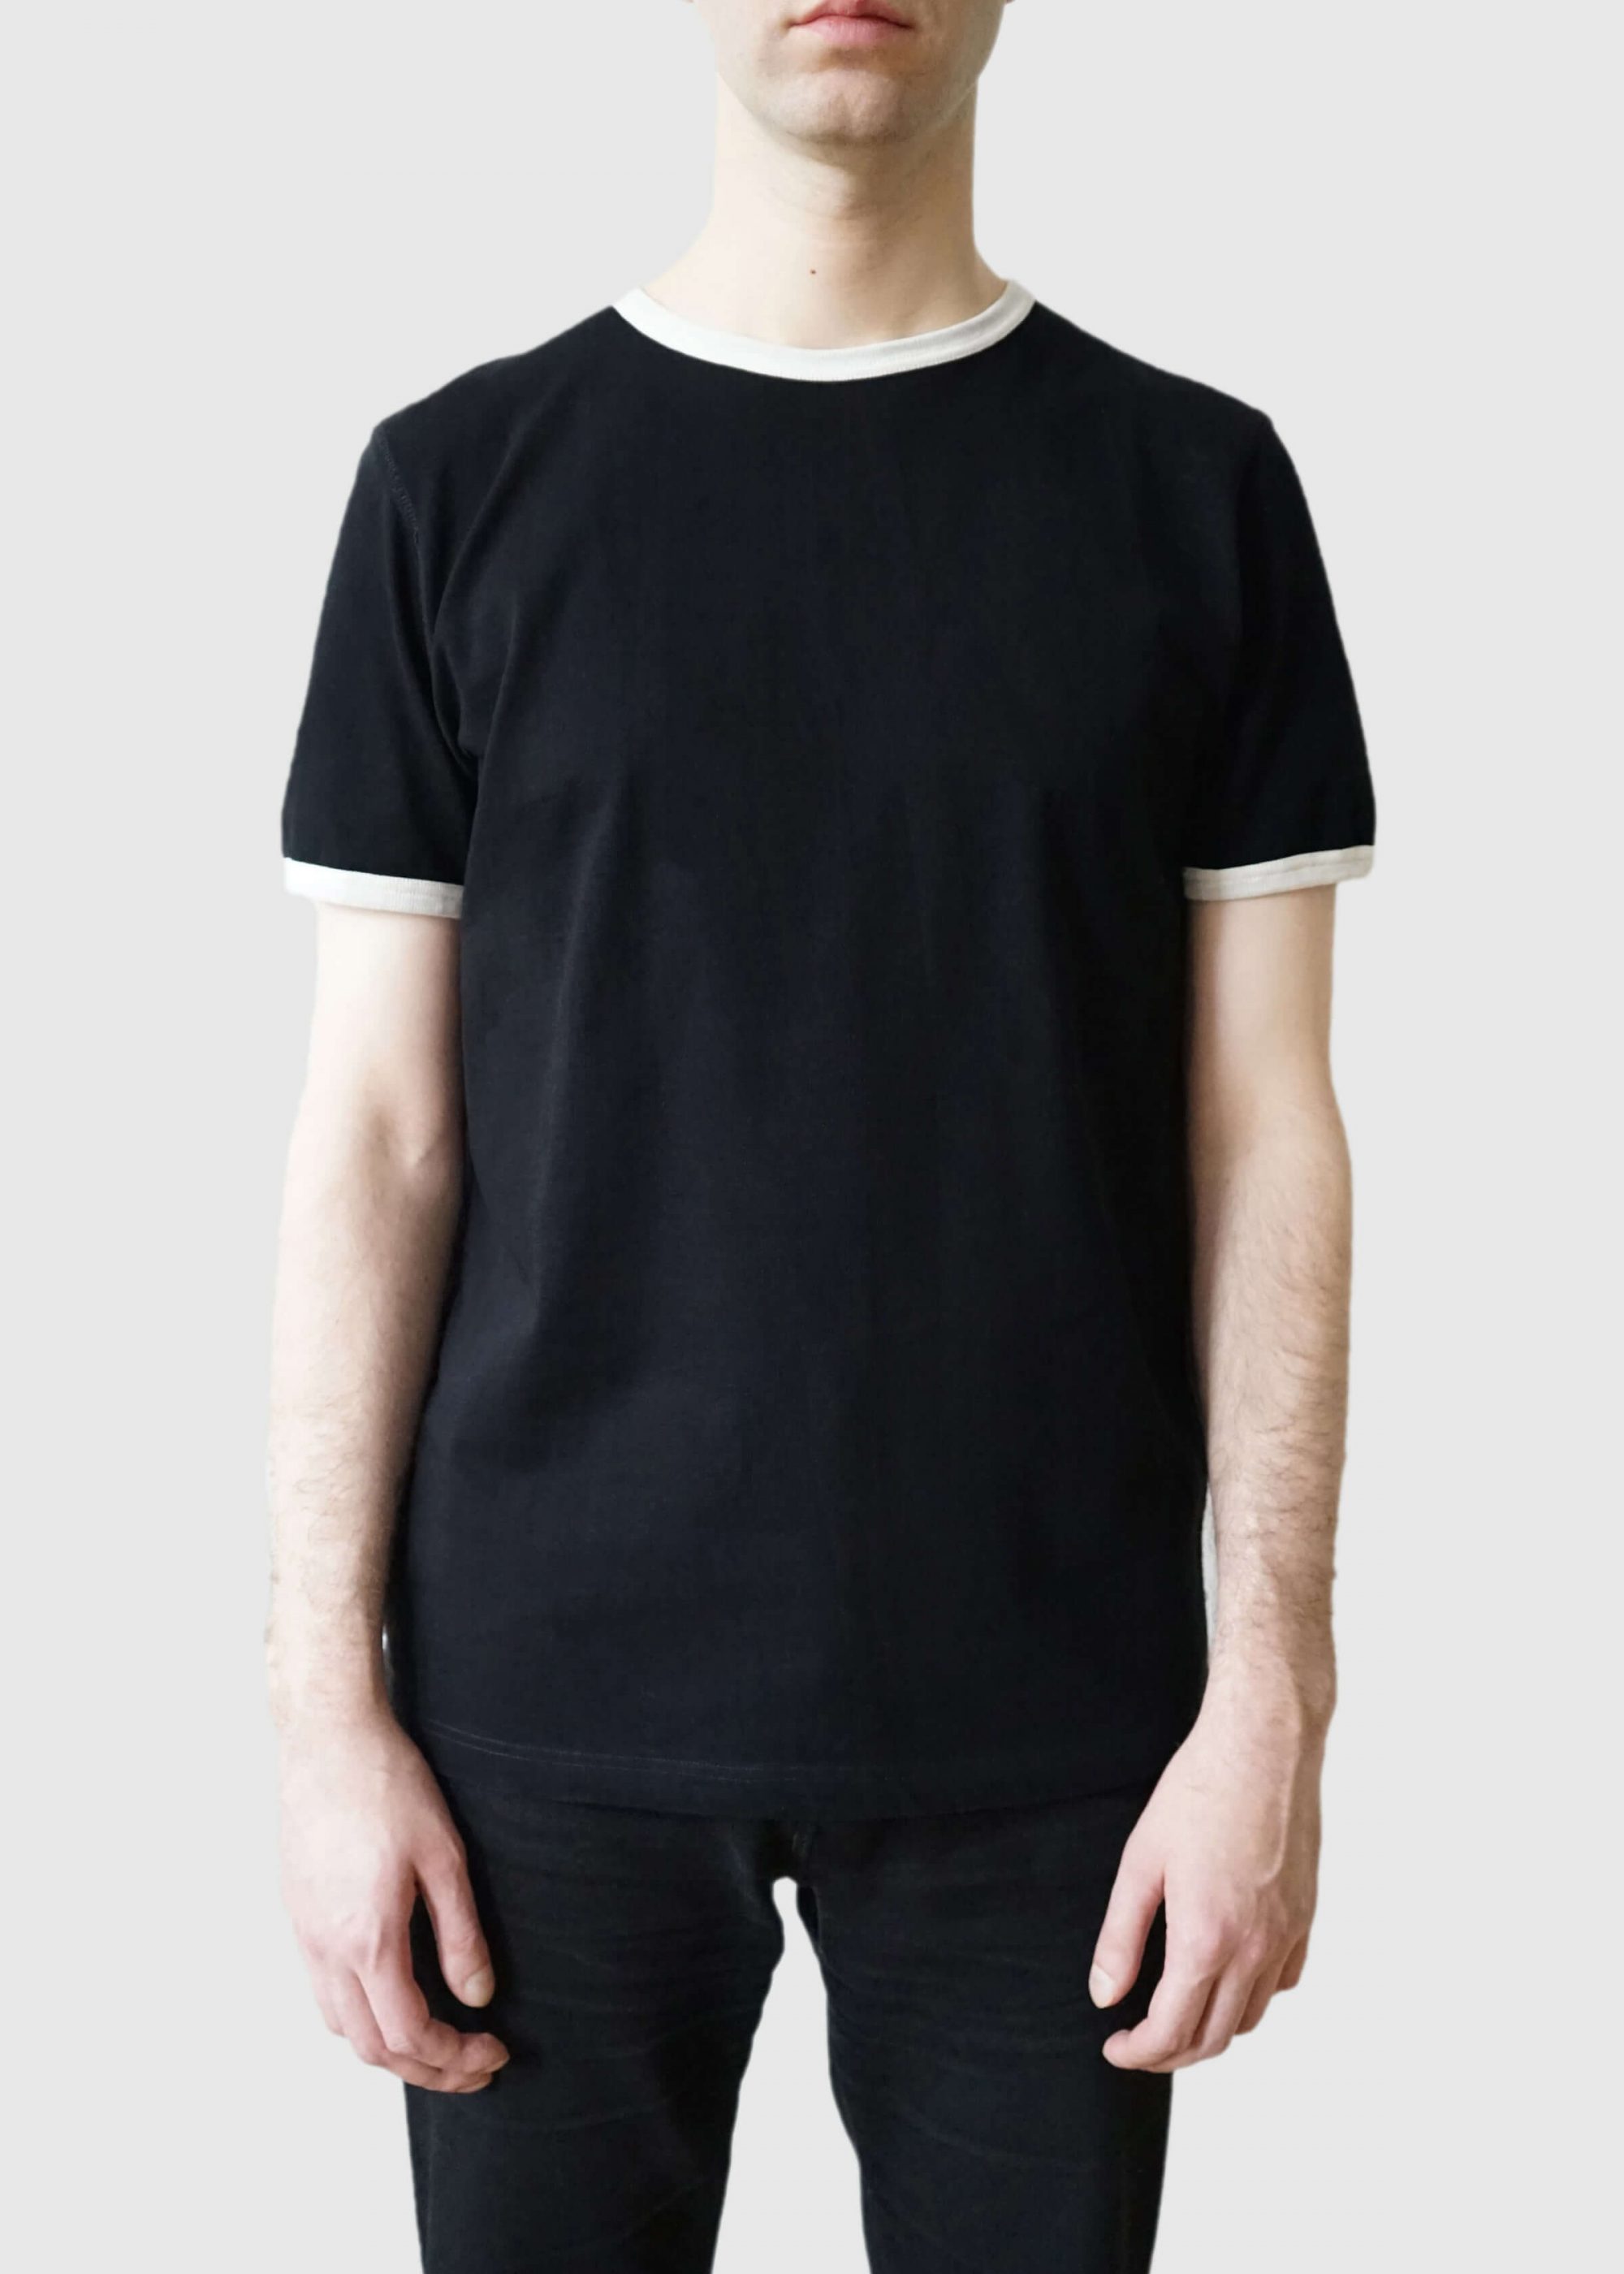 Product image for »Kline« Black Ecru Ringer T-Shirt 100% Organic Cotton